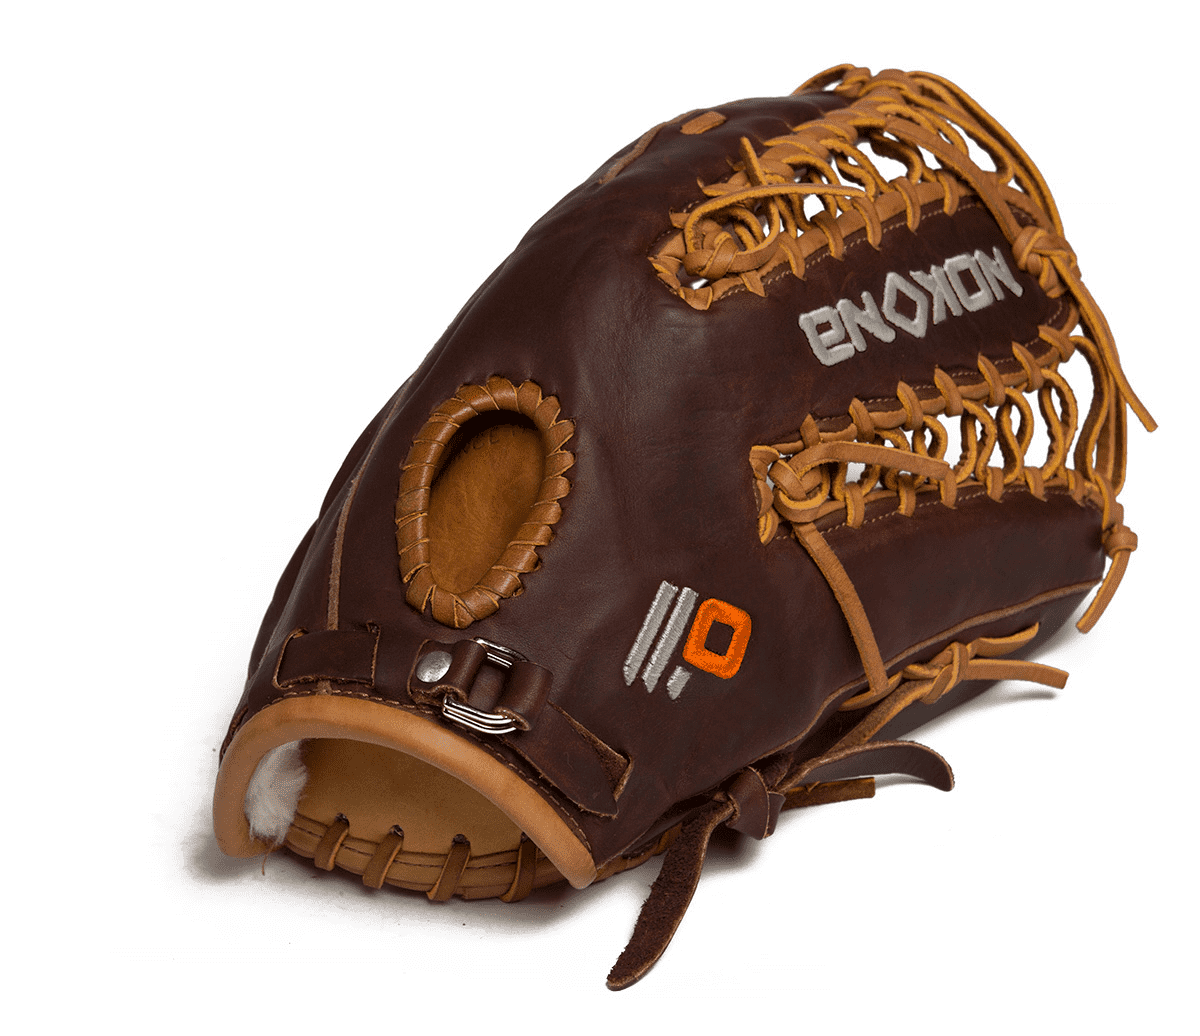 nokona-select-plus-s7-12-25-in-baseball-glove